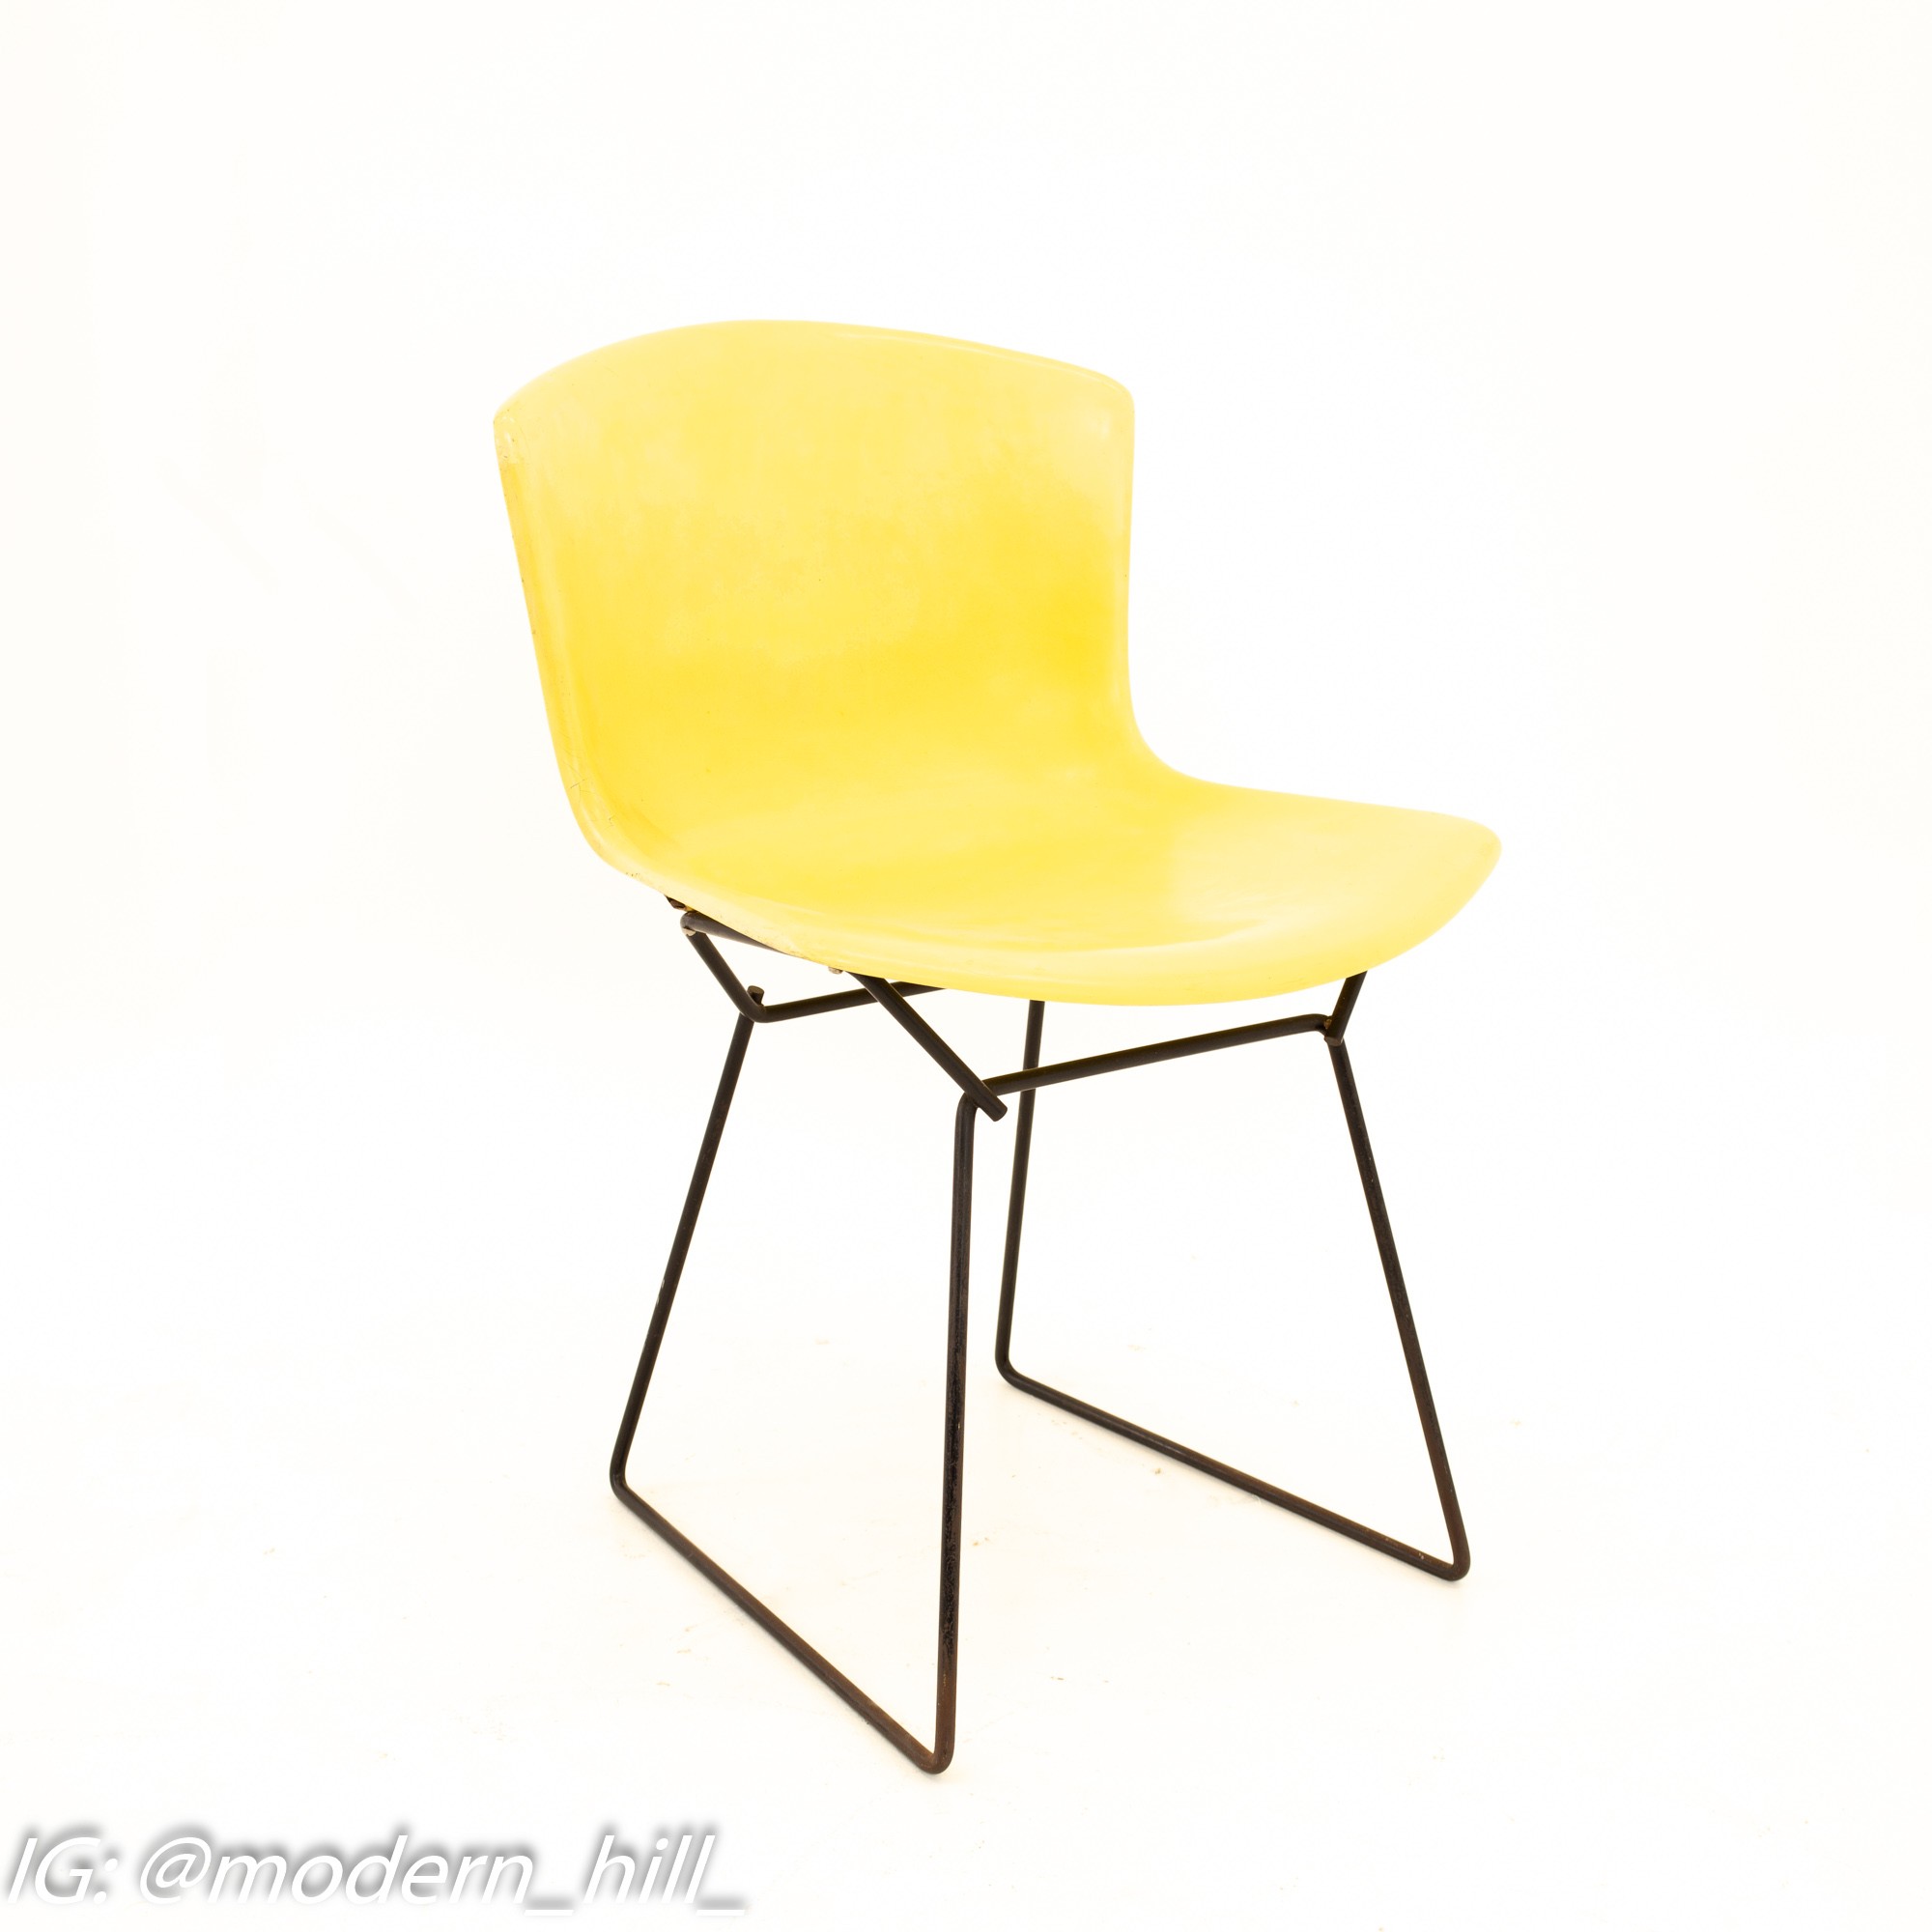 Knoll Mid Century Yellow Fiberglass Side Chair - Pair